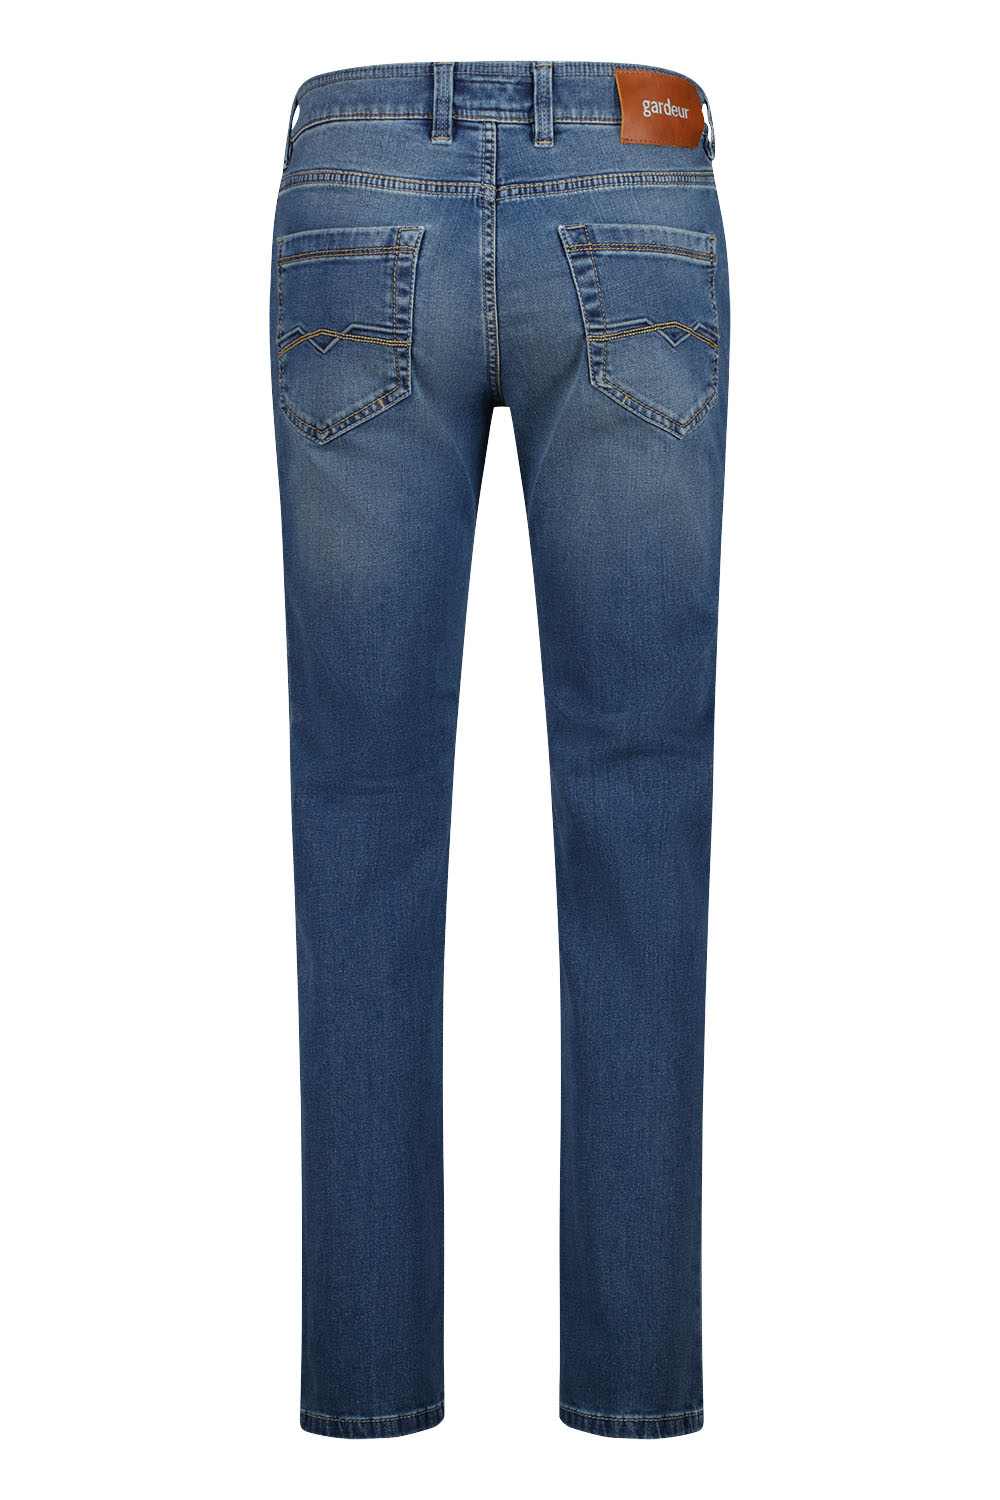 Gardeur - Batu Jeans Indigo Blauw - Maat W 38 - L 30 - Modern-fit